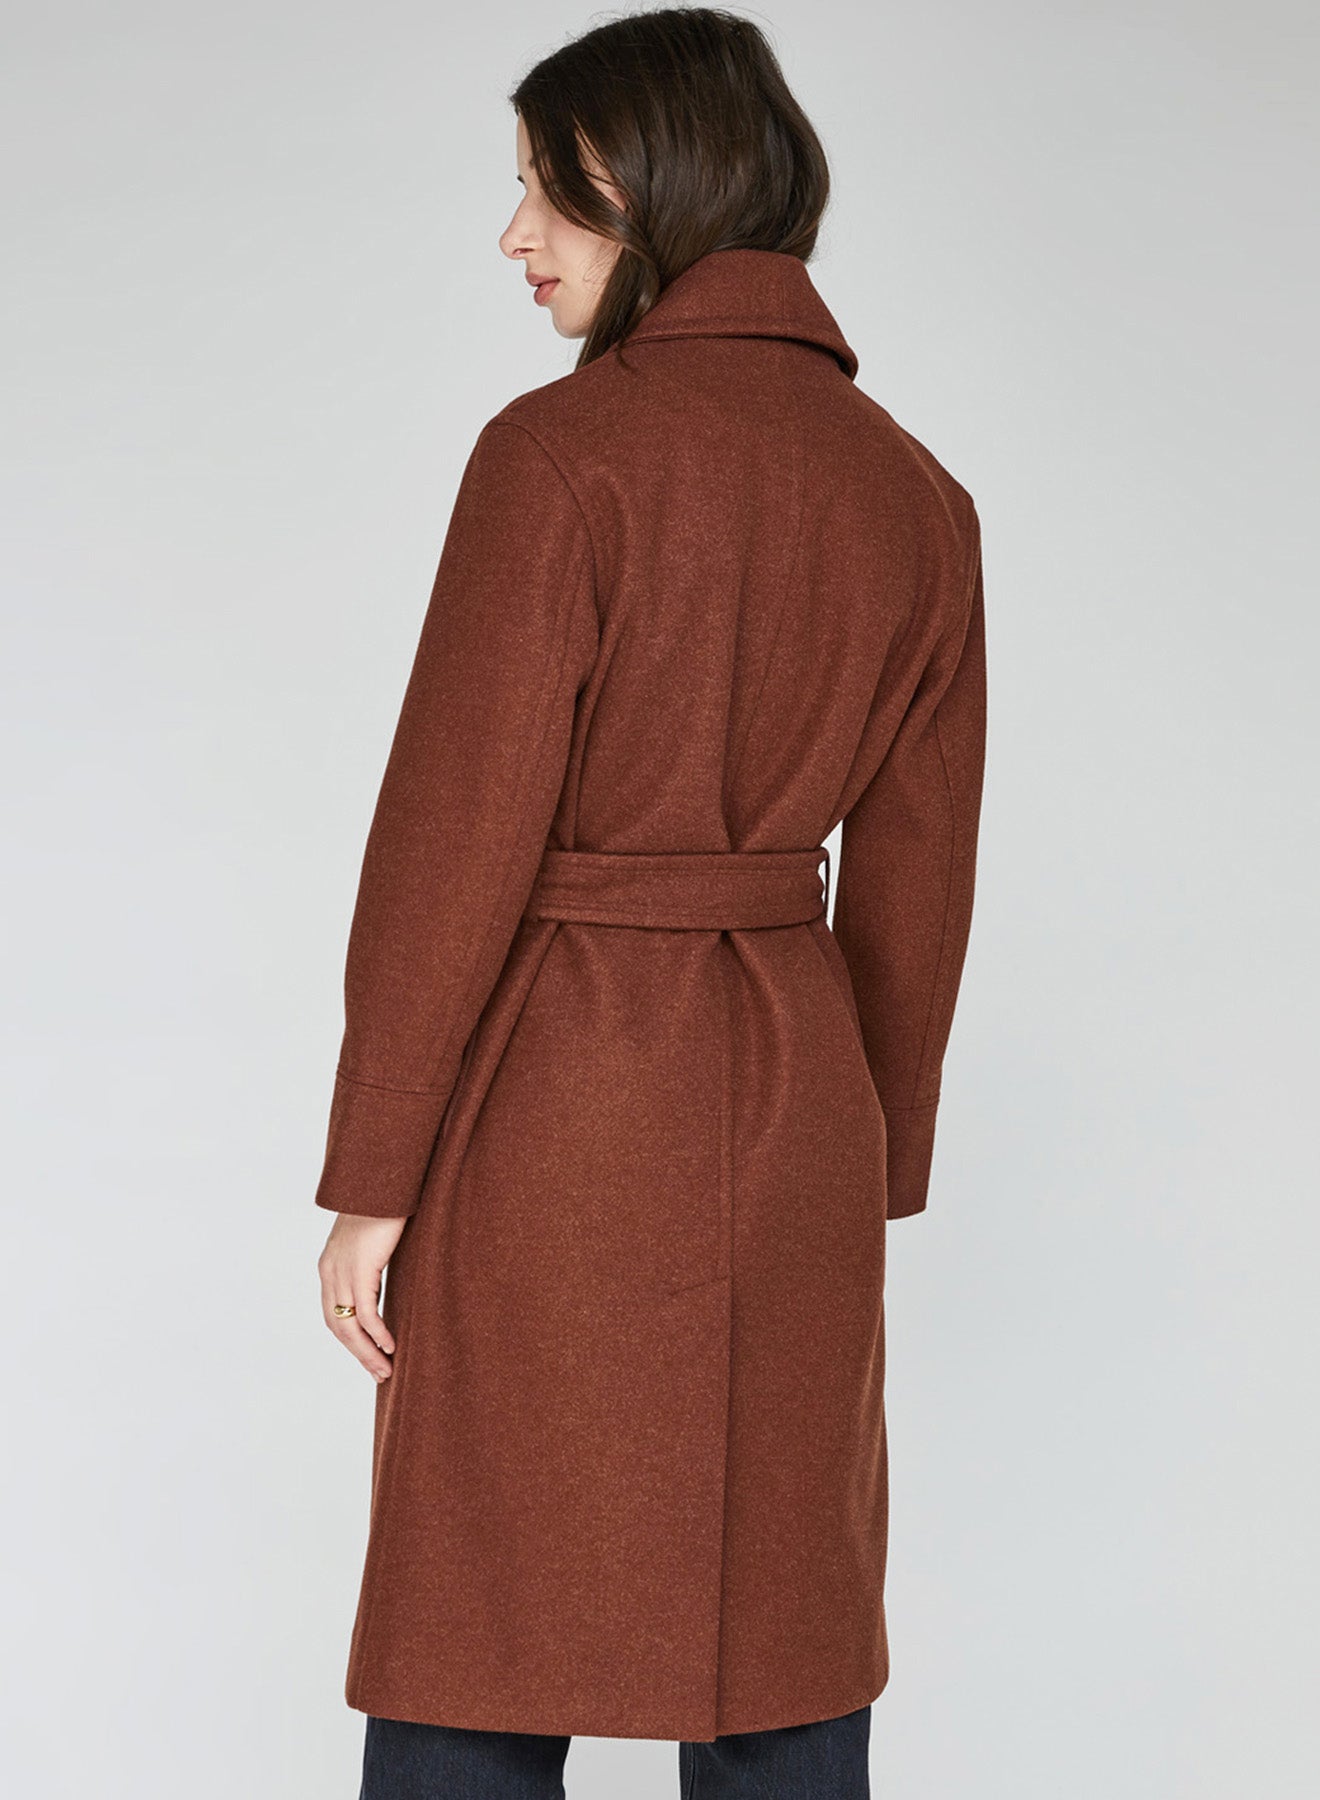 A woman wearing a belted wool look coat.